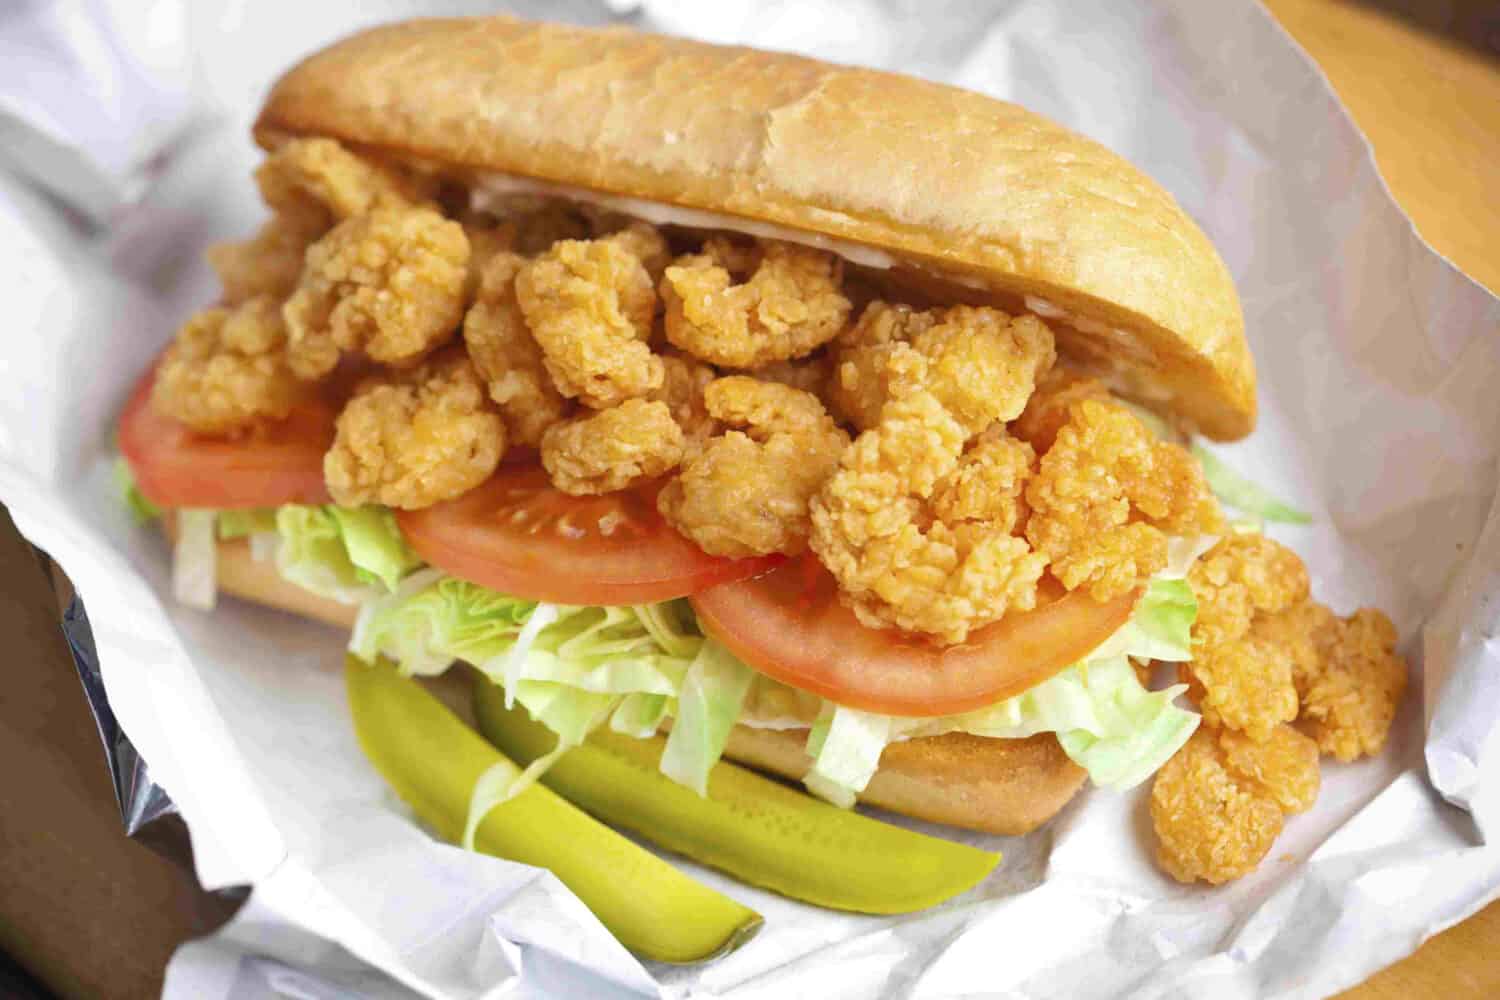 shrimp po boy sandwich